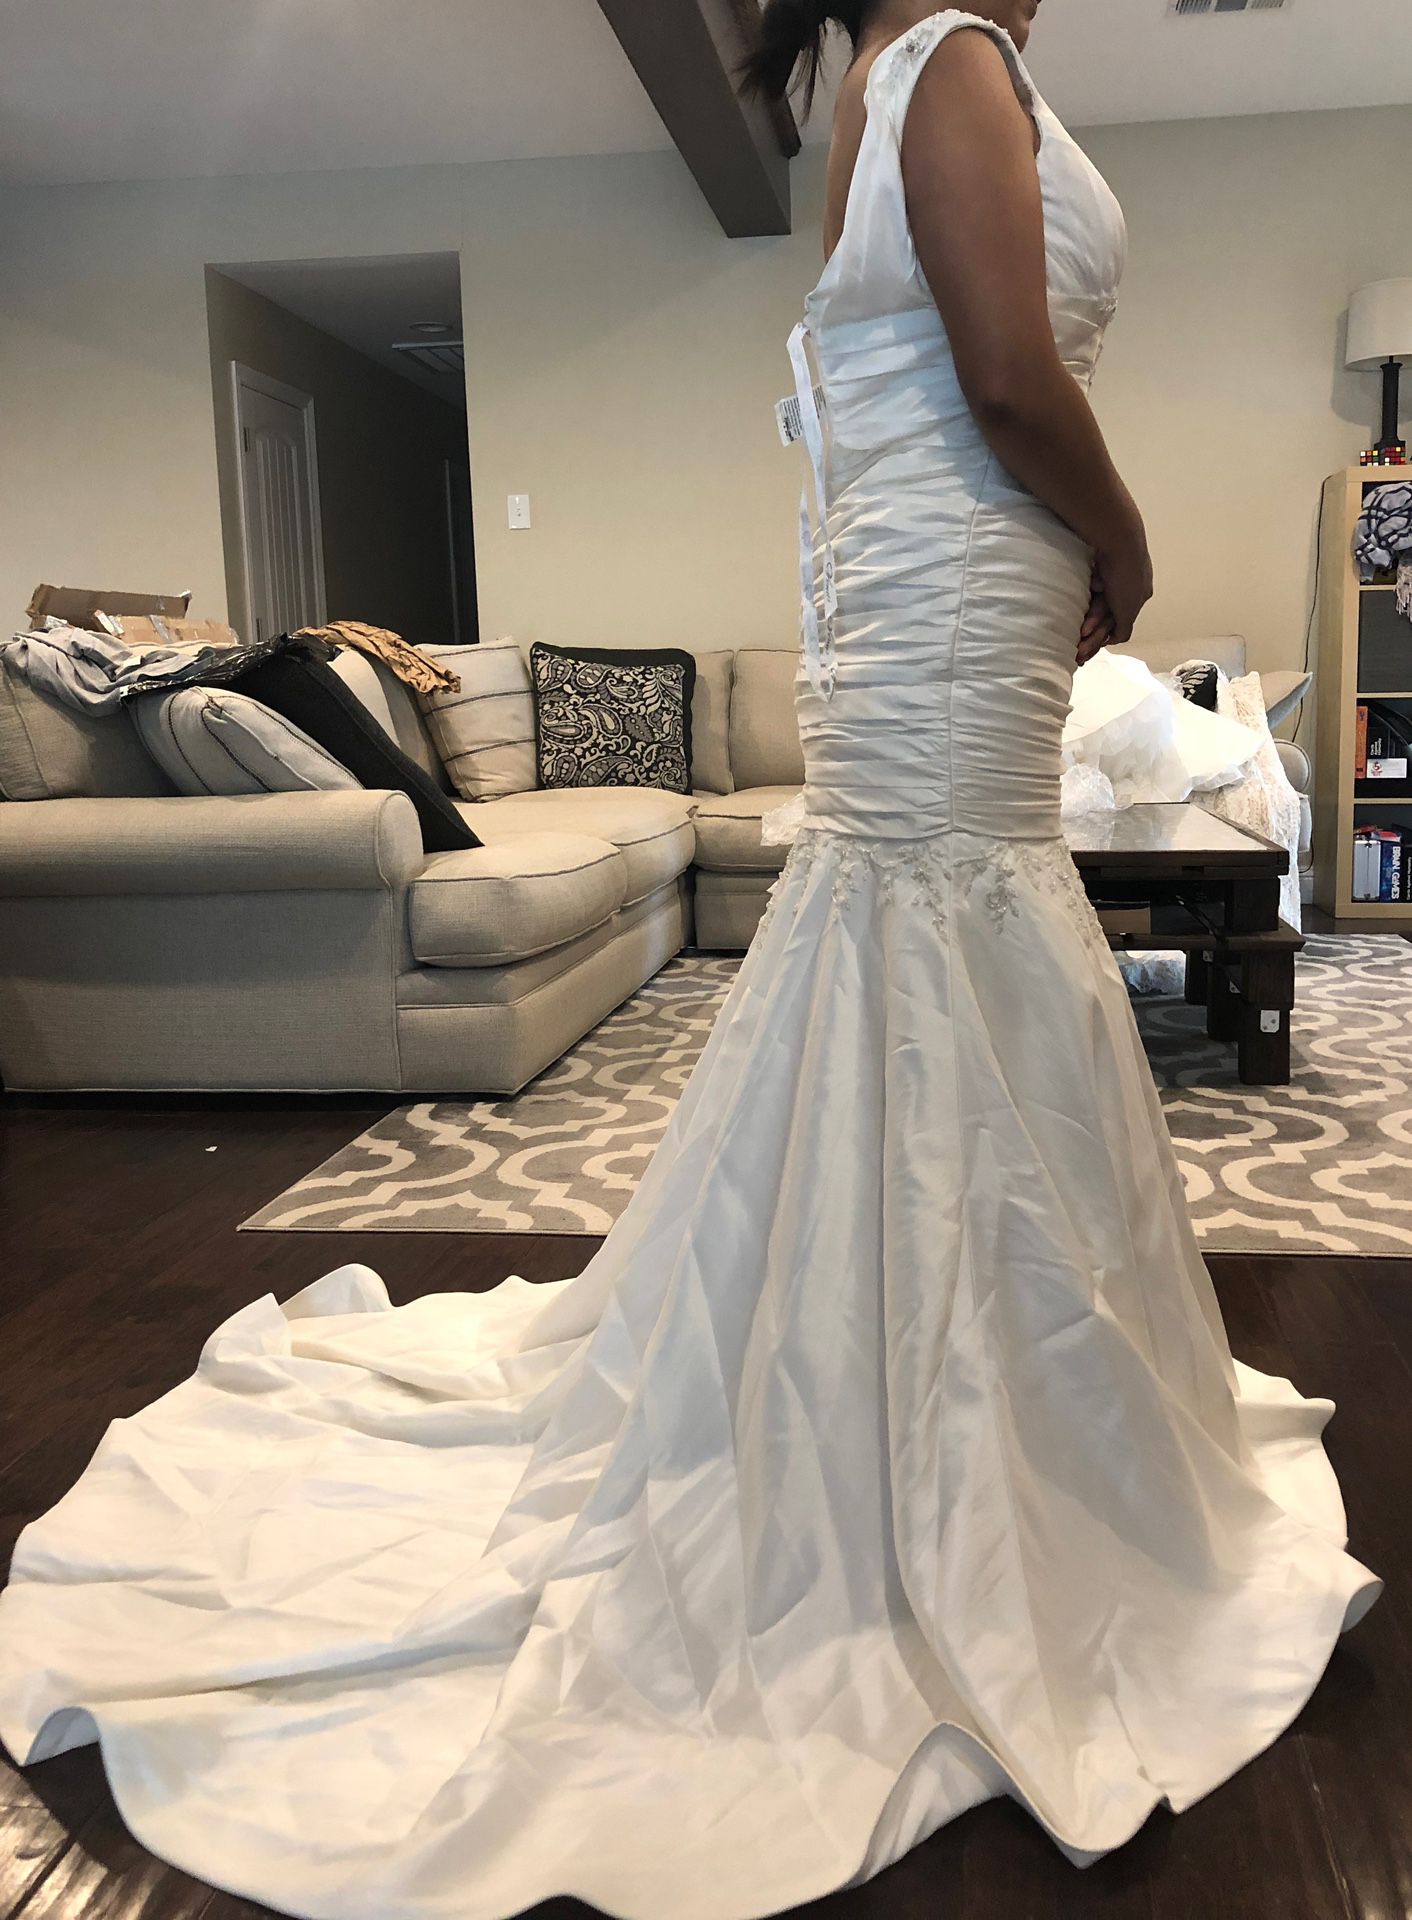 Never Worn, Brand New Wedding Dress